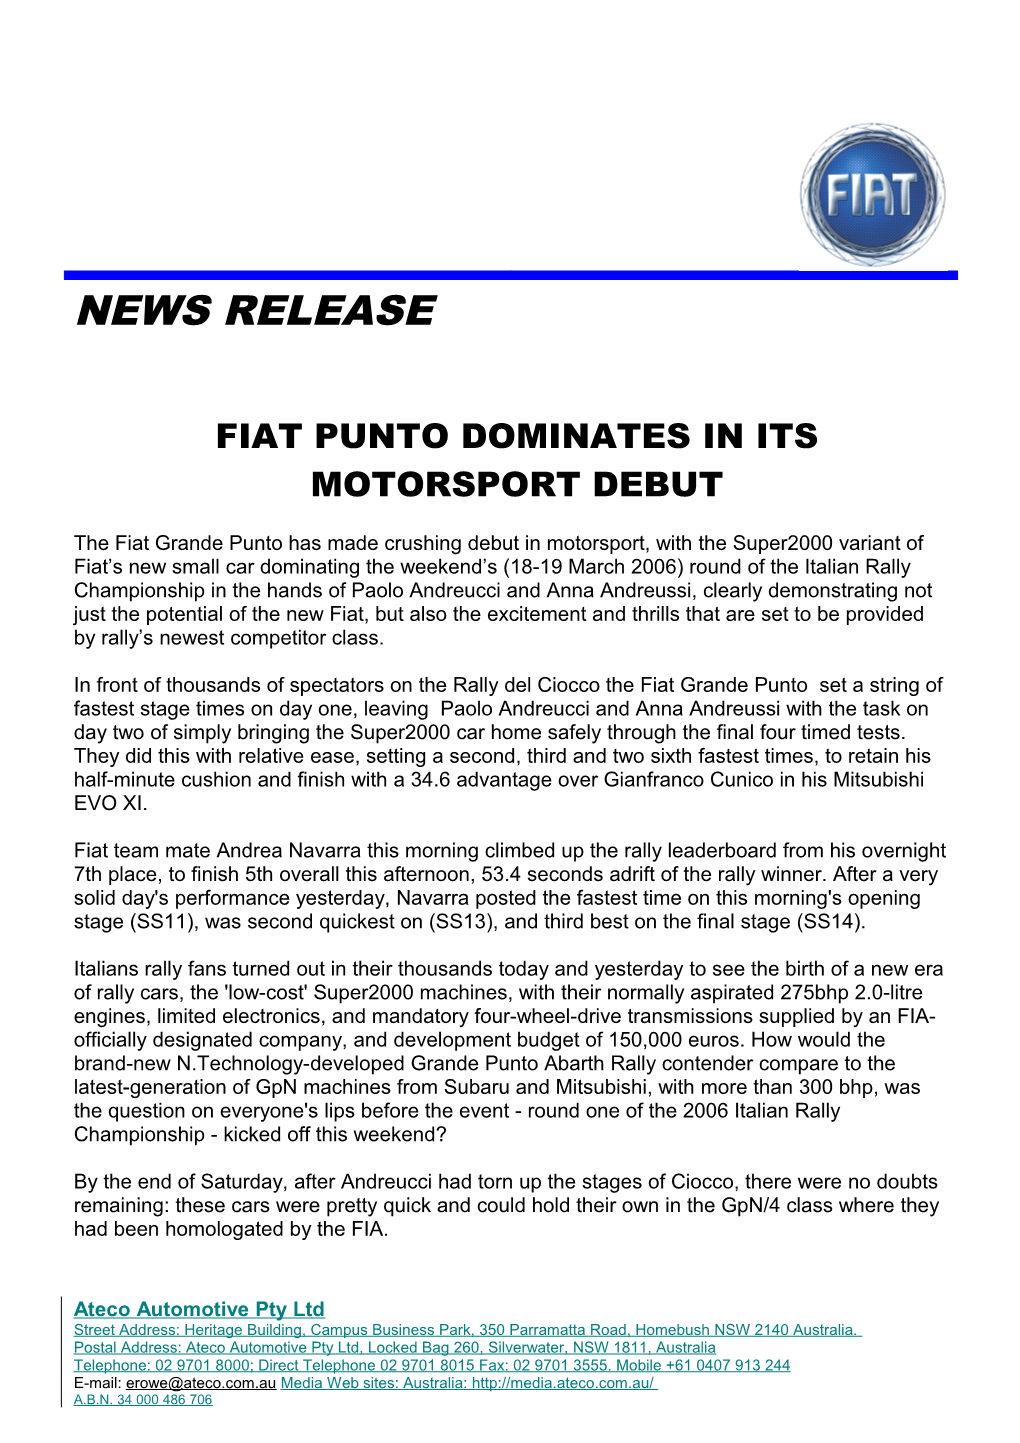 Fiat Punto Dominates in Its Motorsport Debut